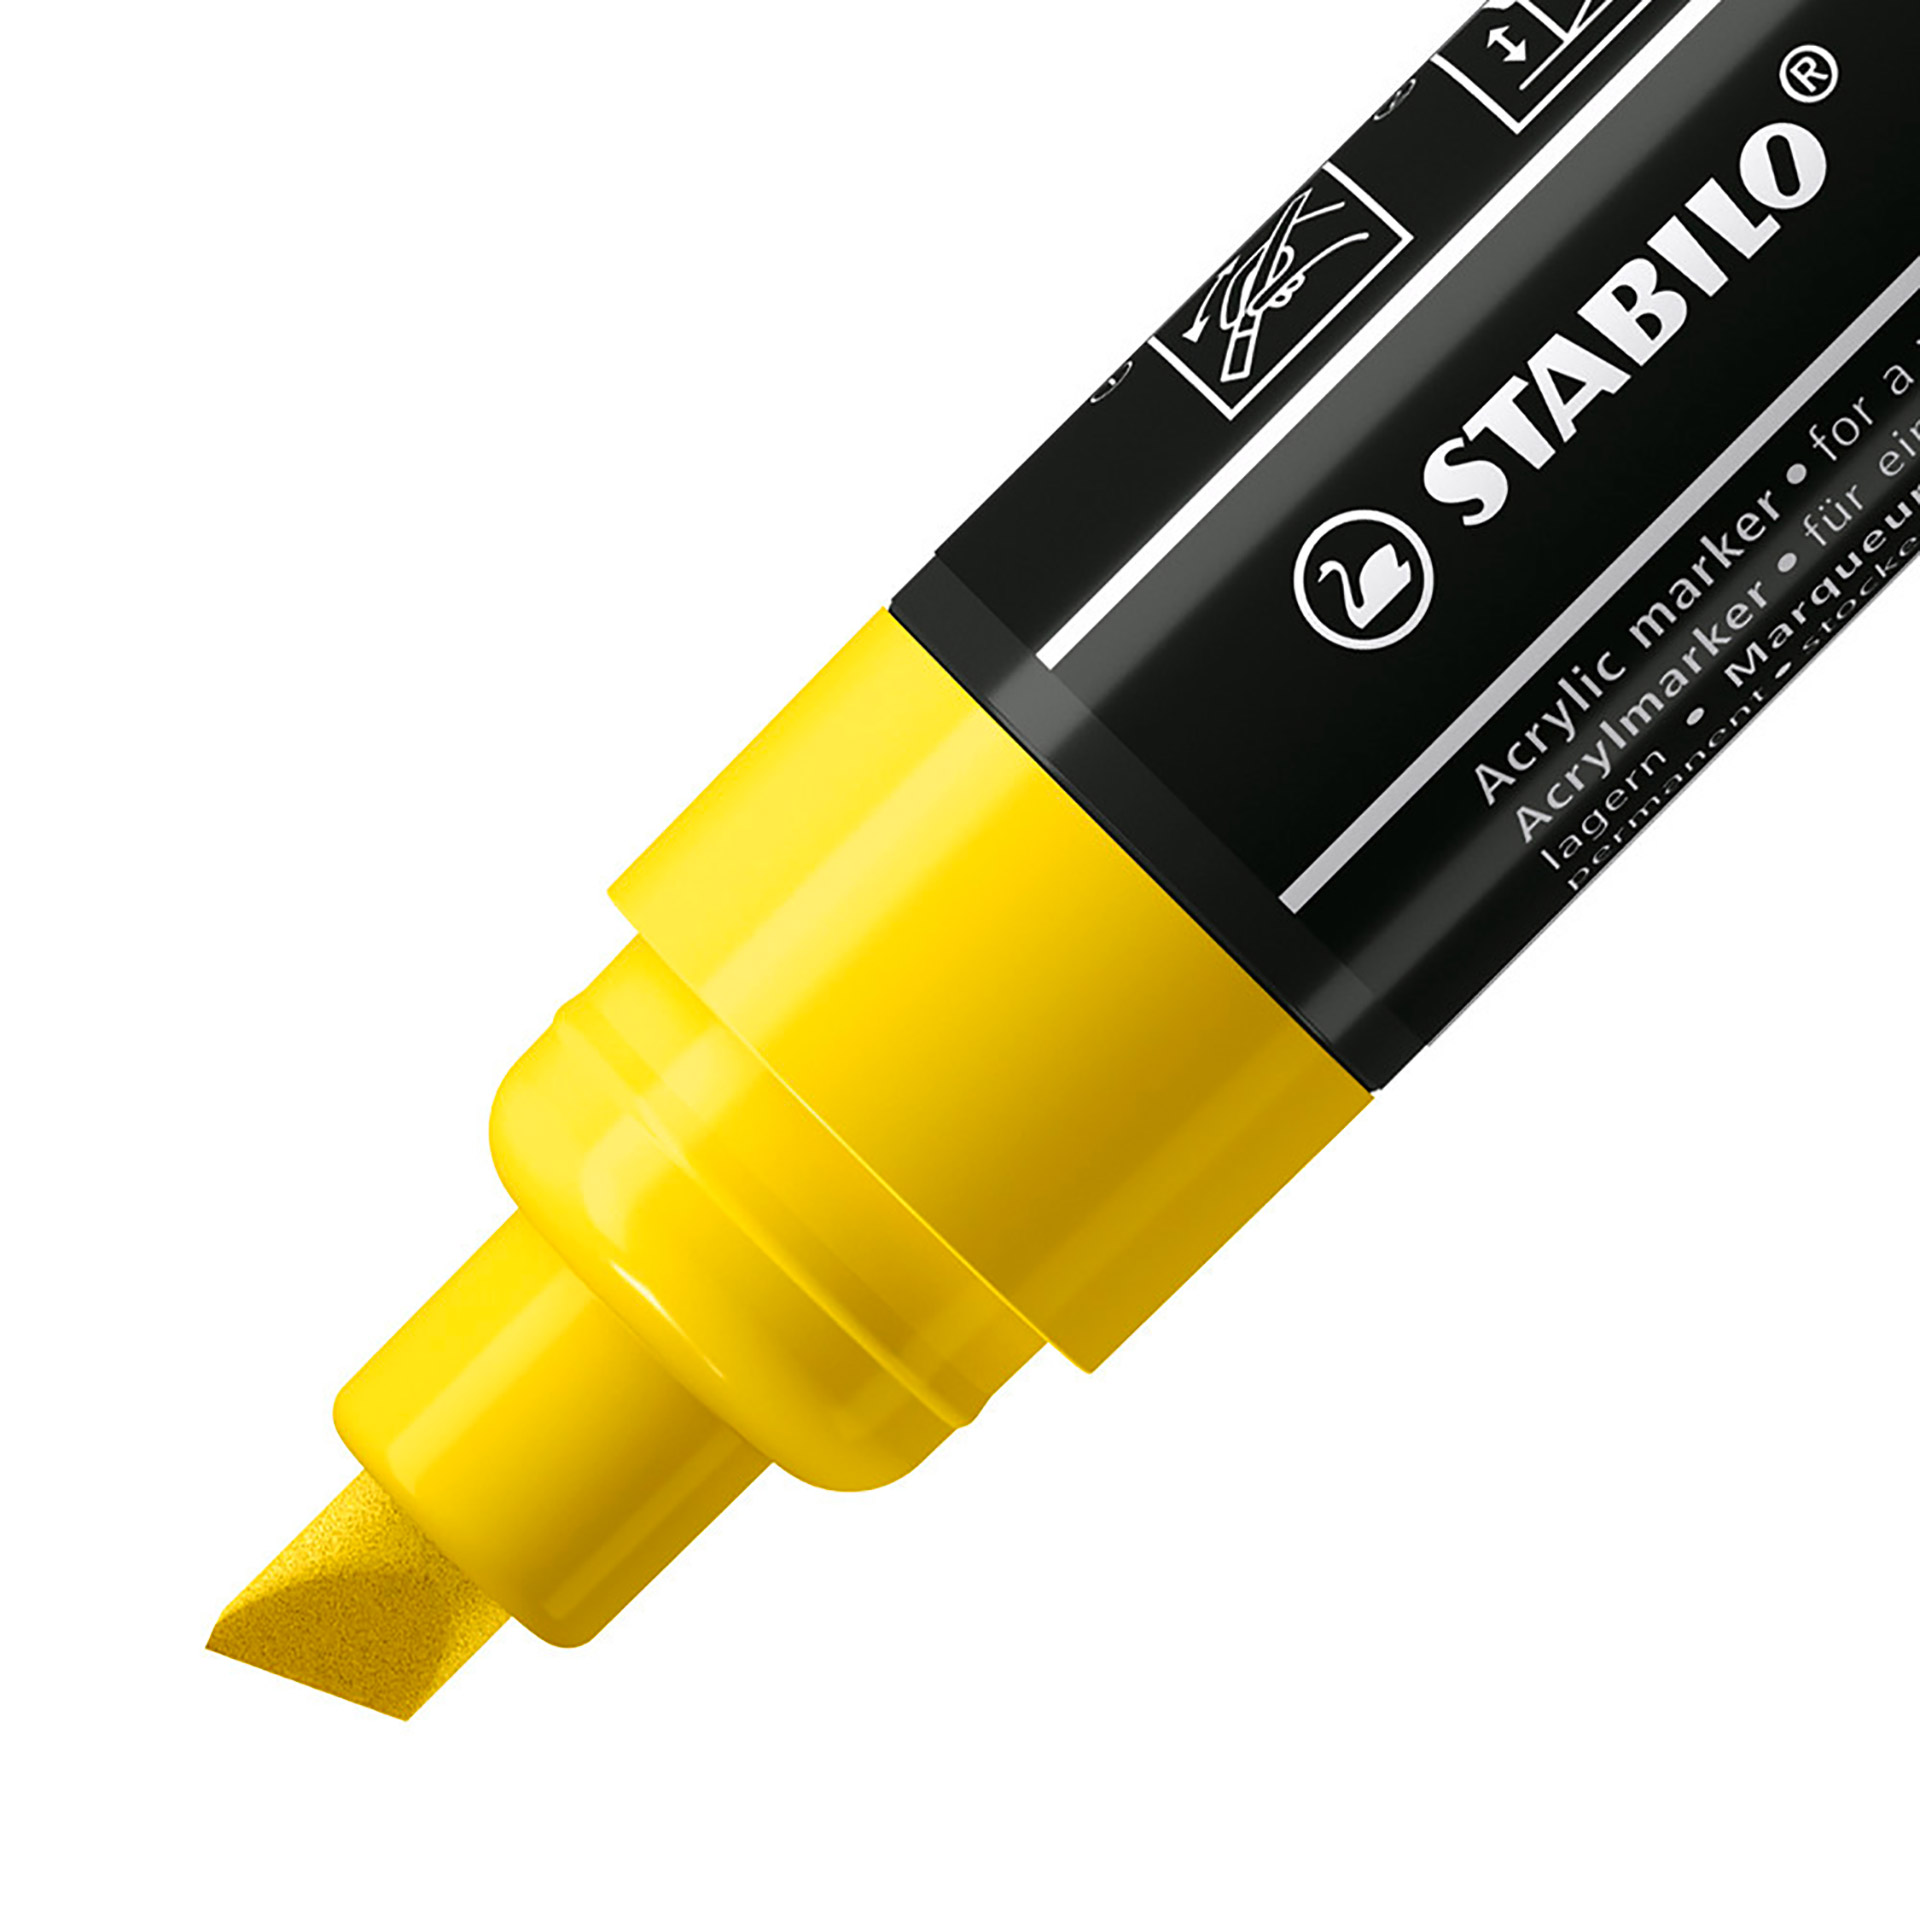 STABILO FREE Acrylic - T800C Punta a scalpello 4-10mm - Seaside Edition - Astucc, , large